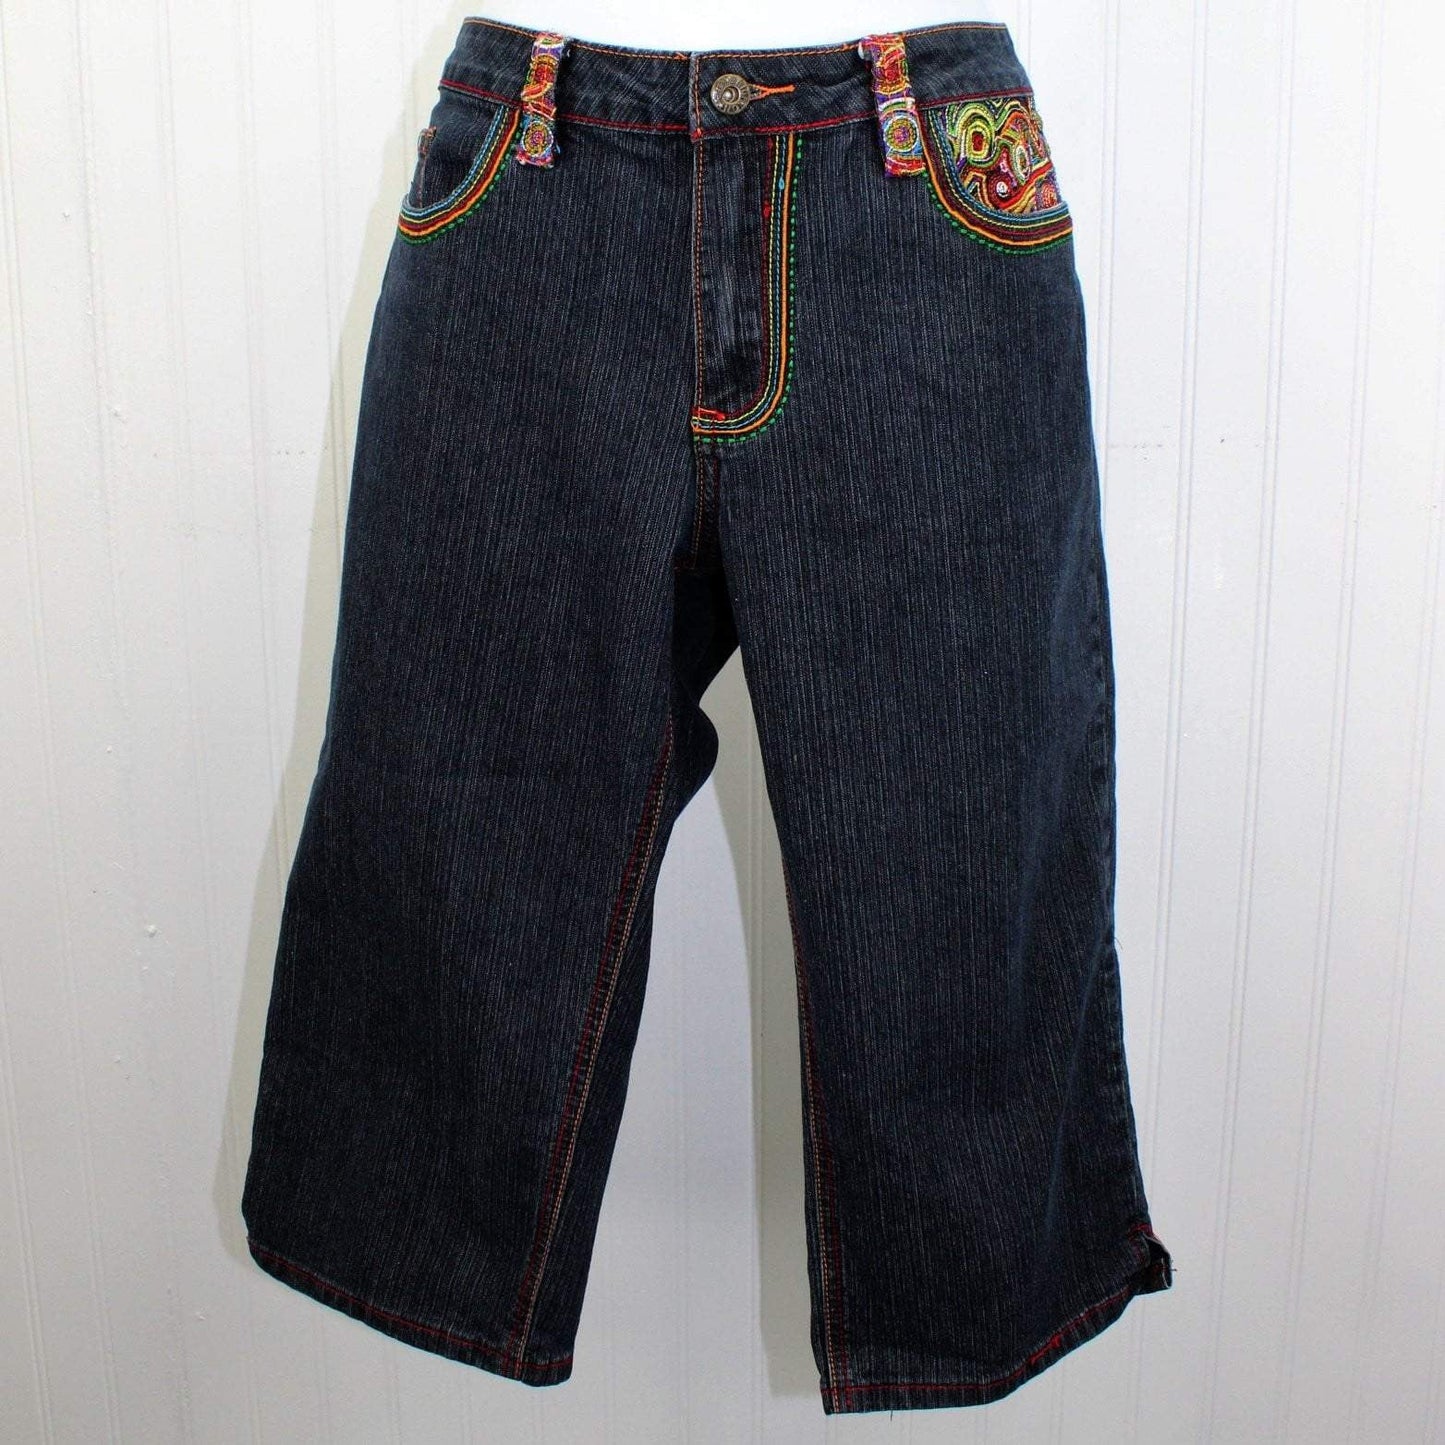 Brighton Blues Embroidered Jeans - Capri Length Size 8 super cute